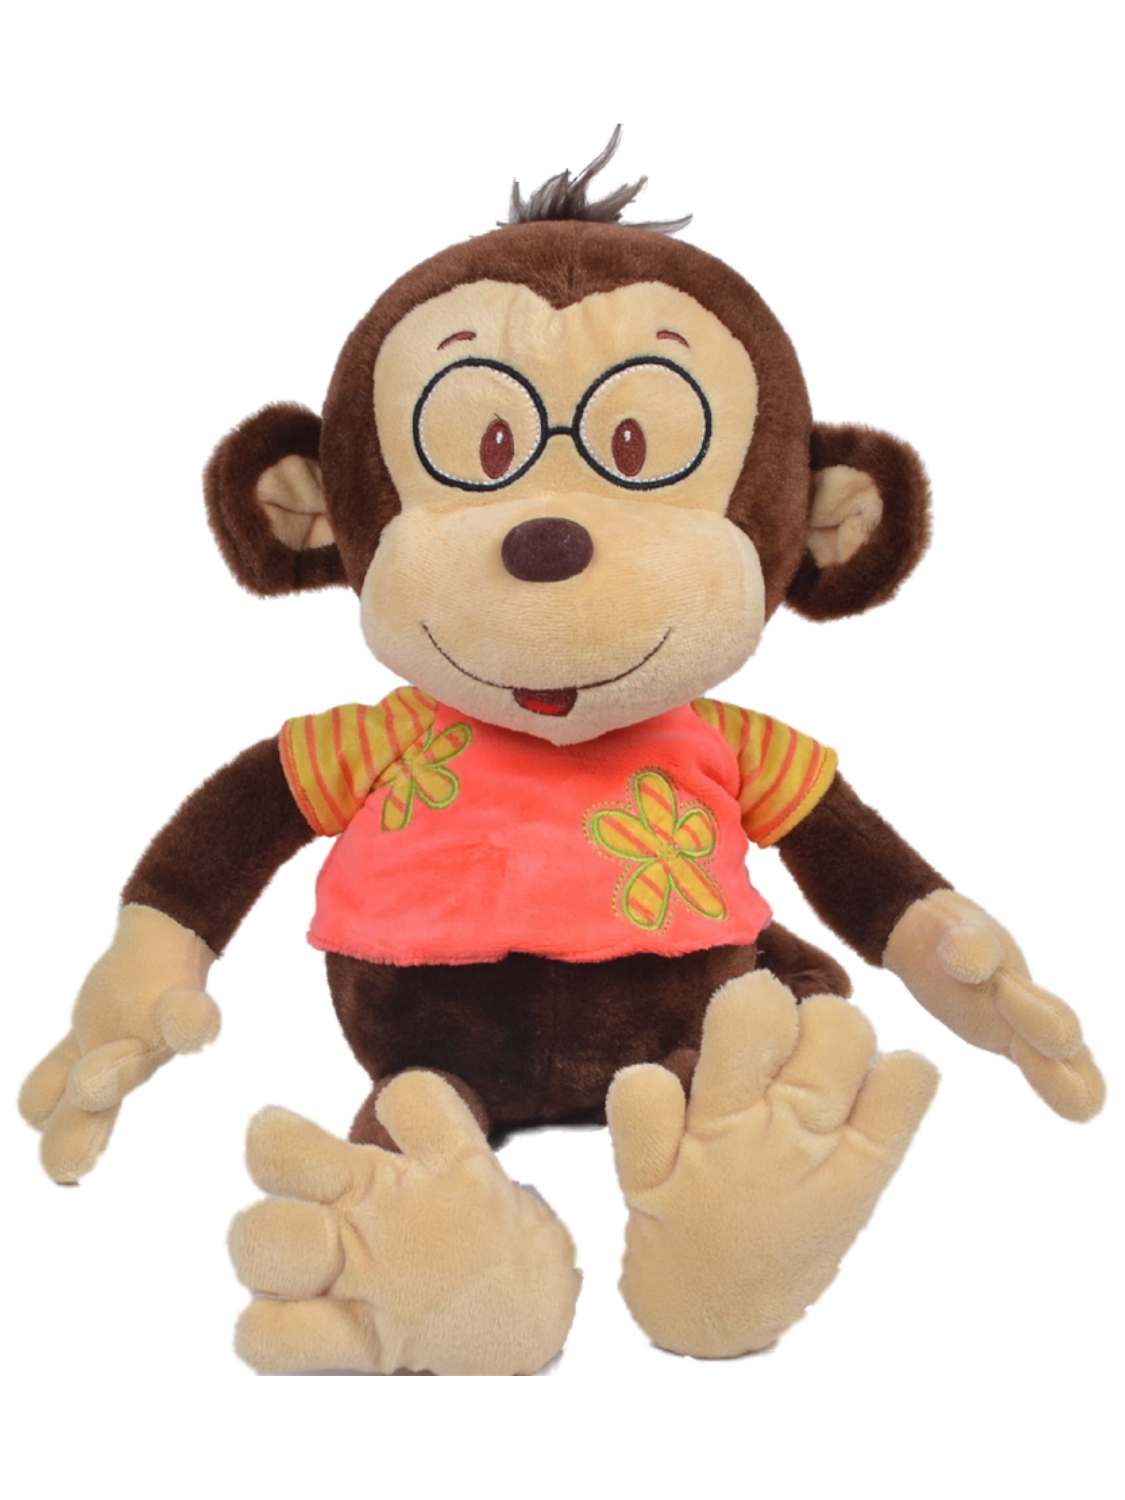 Linzy Plush Linzy Toys Plush Owen The Monkey With T-Shirt 18